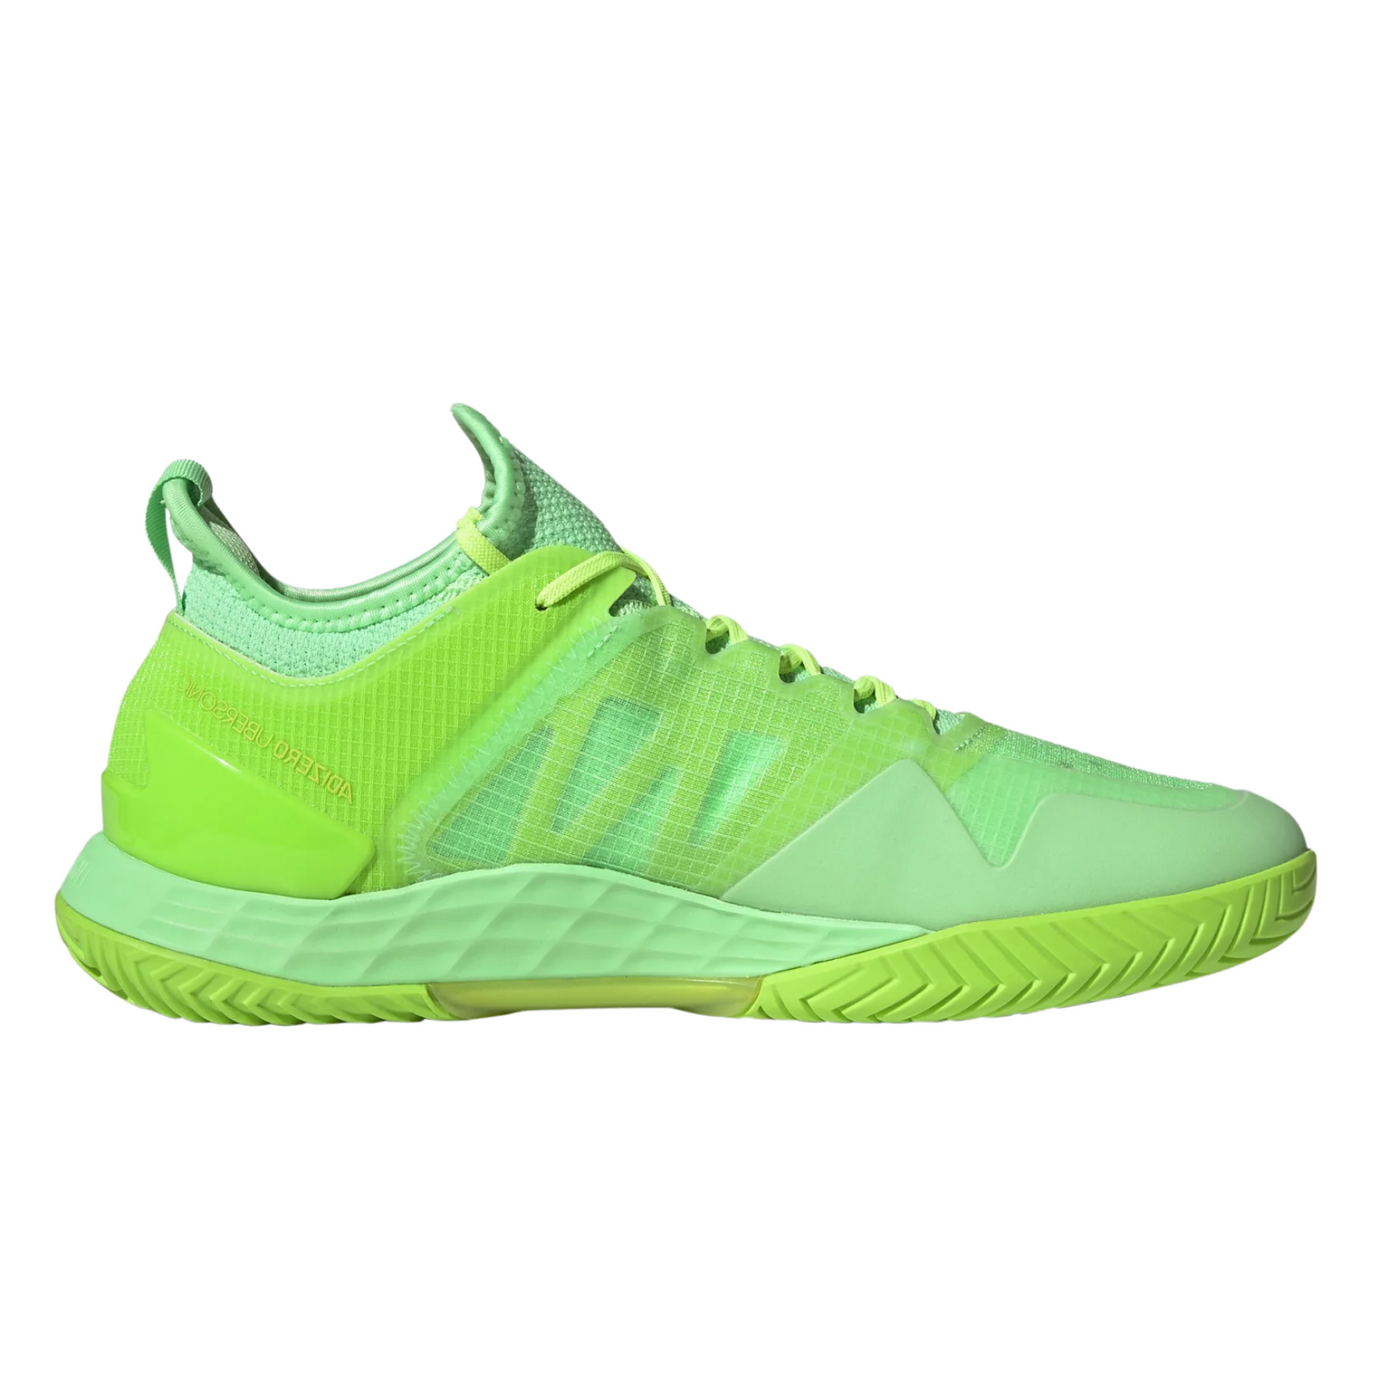 Adidas Adizero Ubersonic 4 Men Tennis Shoes - Beam Green/Signal Green/Solar Green